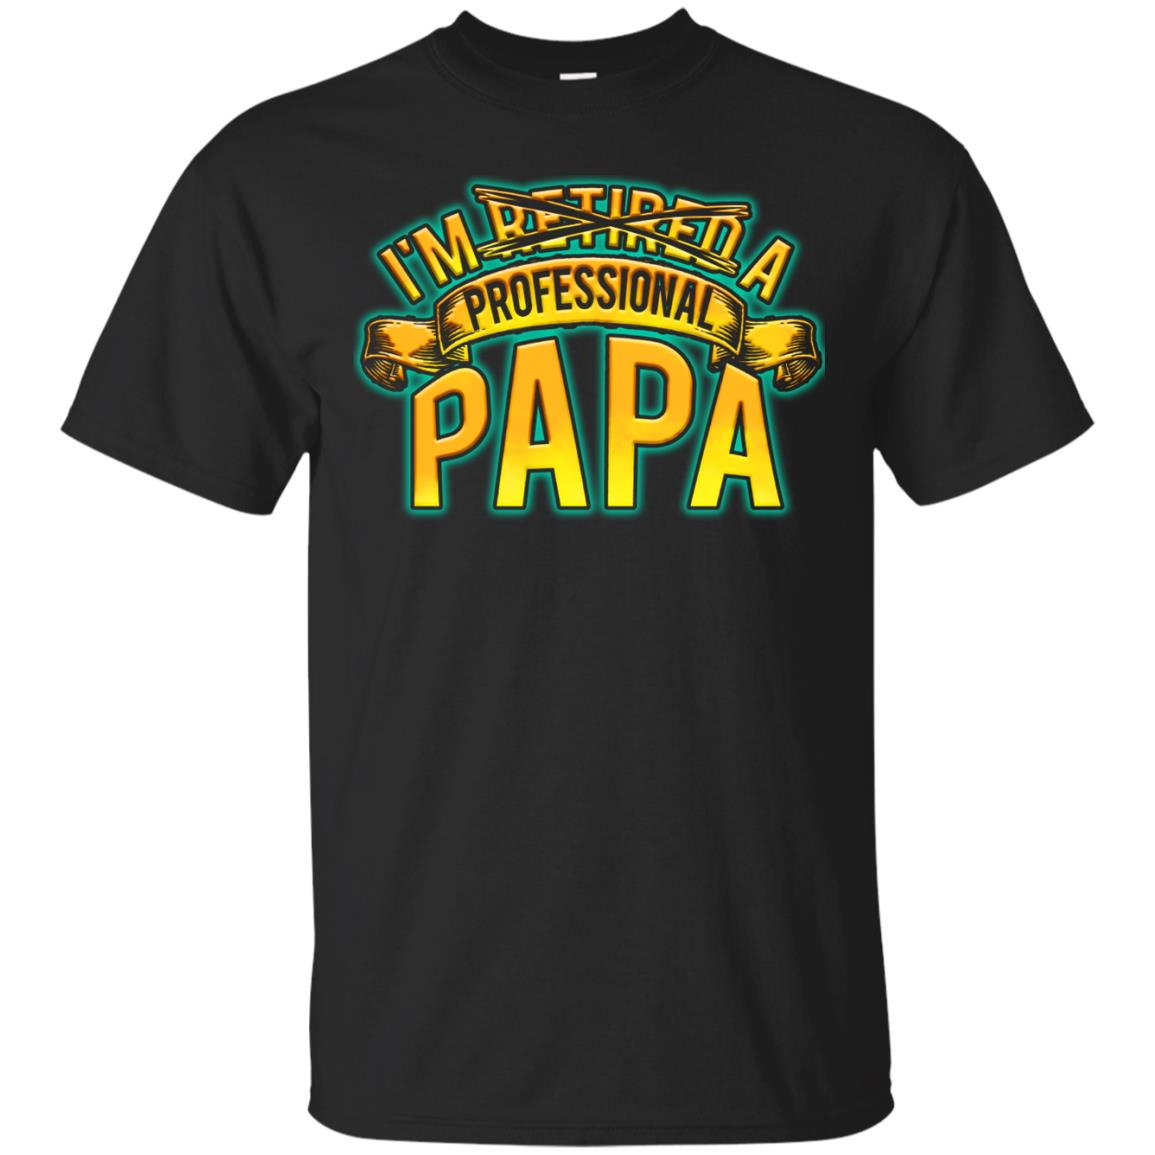 Im Not Retired Im A Professional Papa Shirt